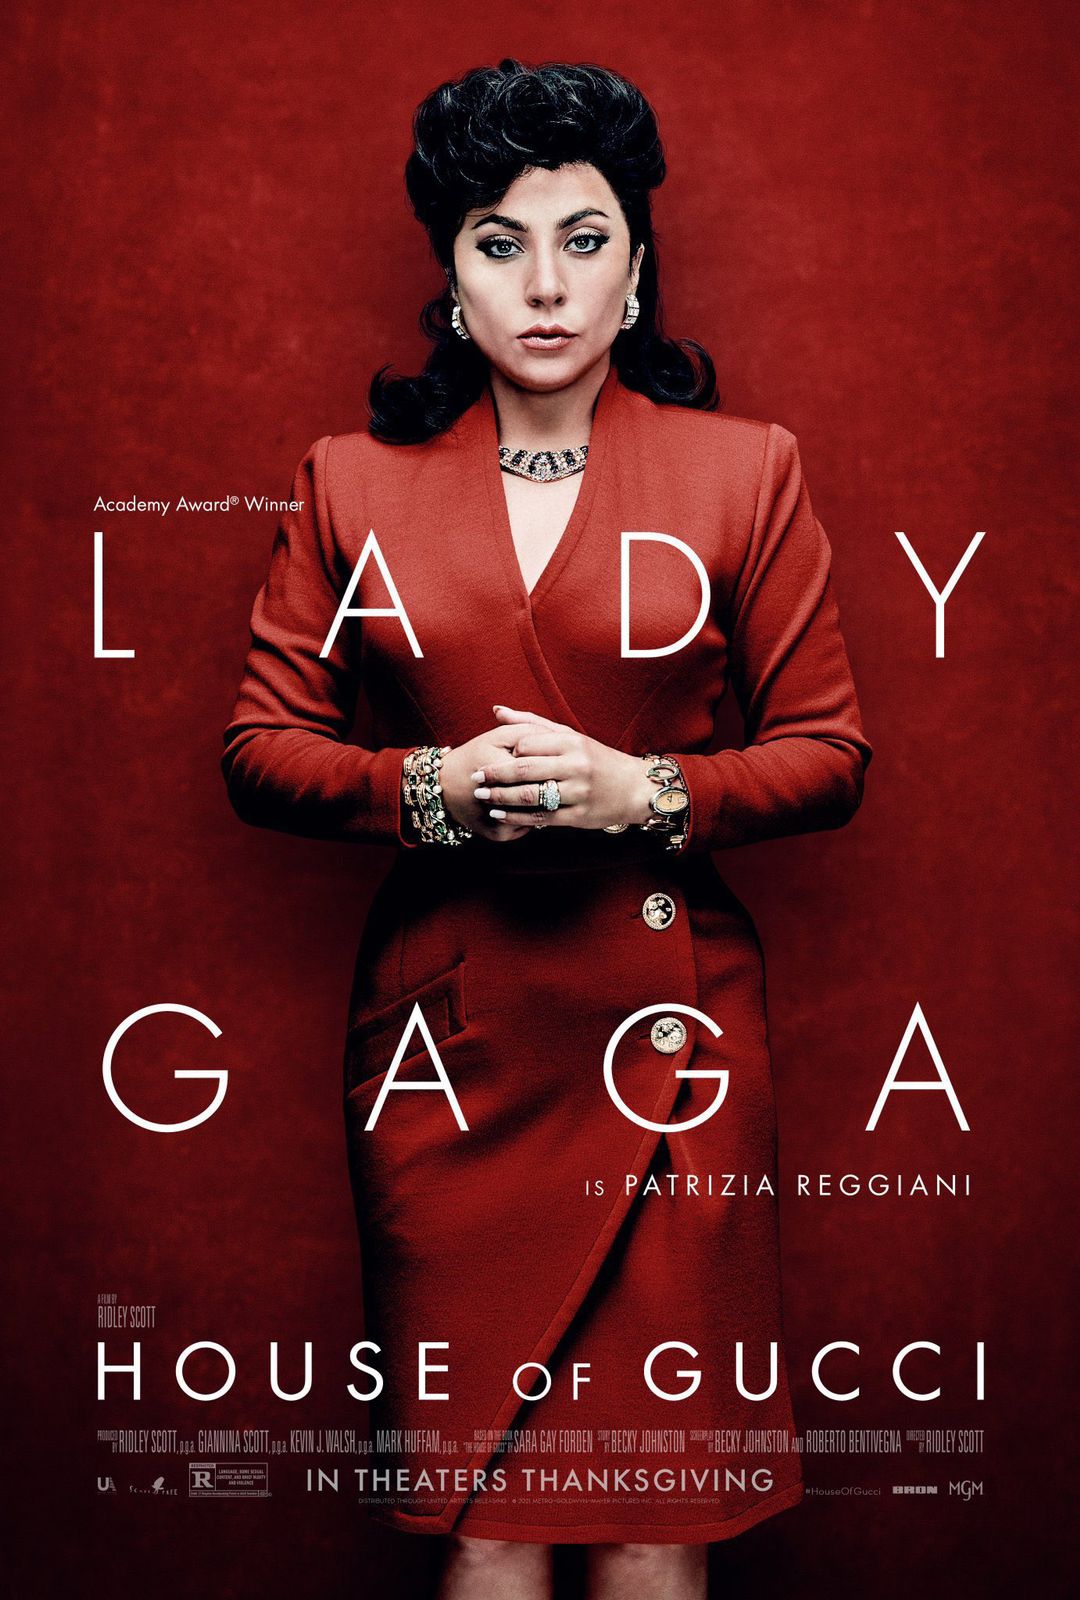 House of Gucci: trailer novo mostra Lady Gaga maligna